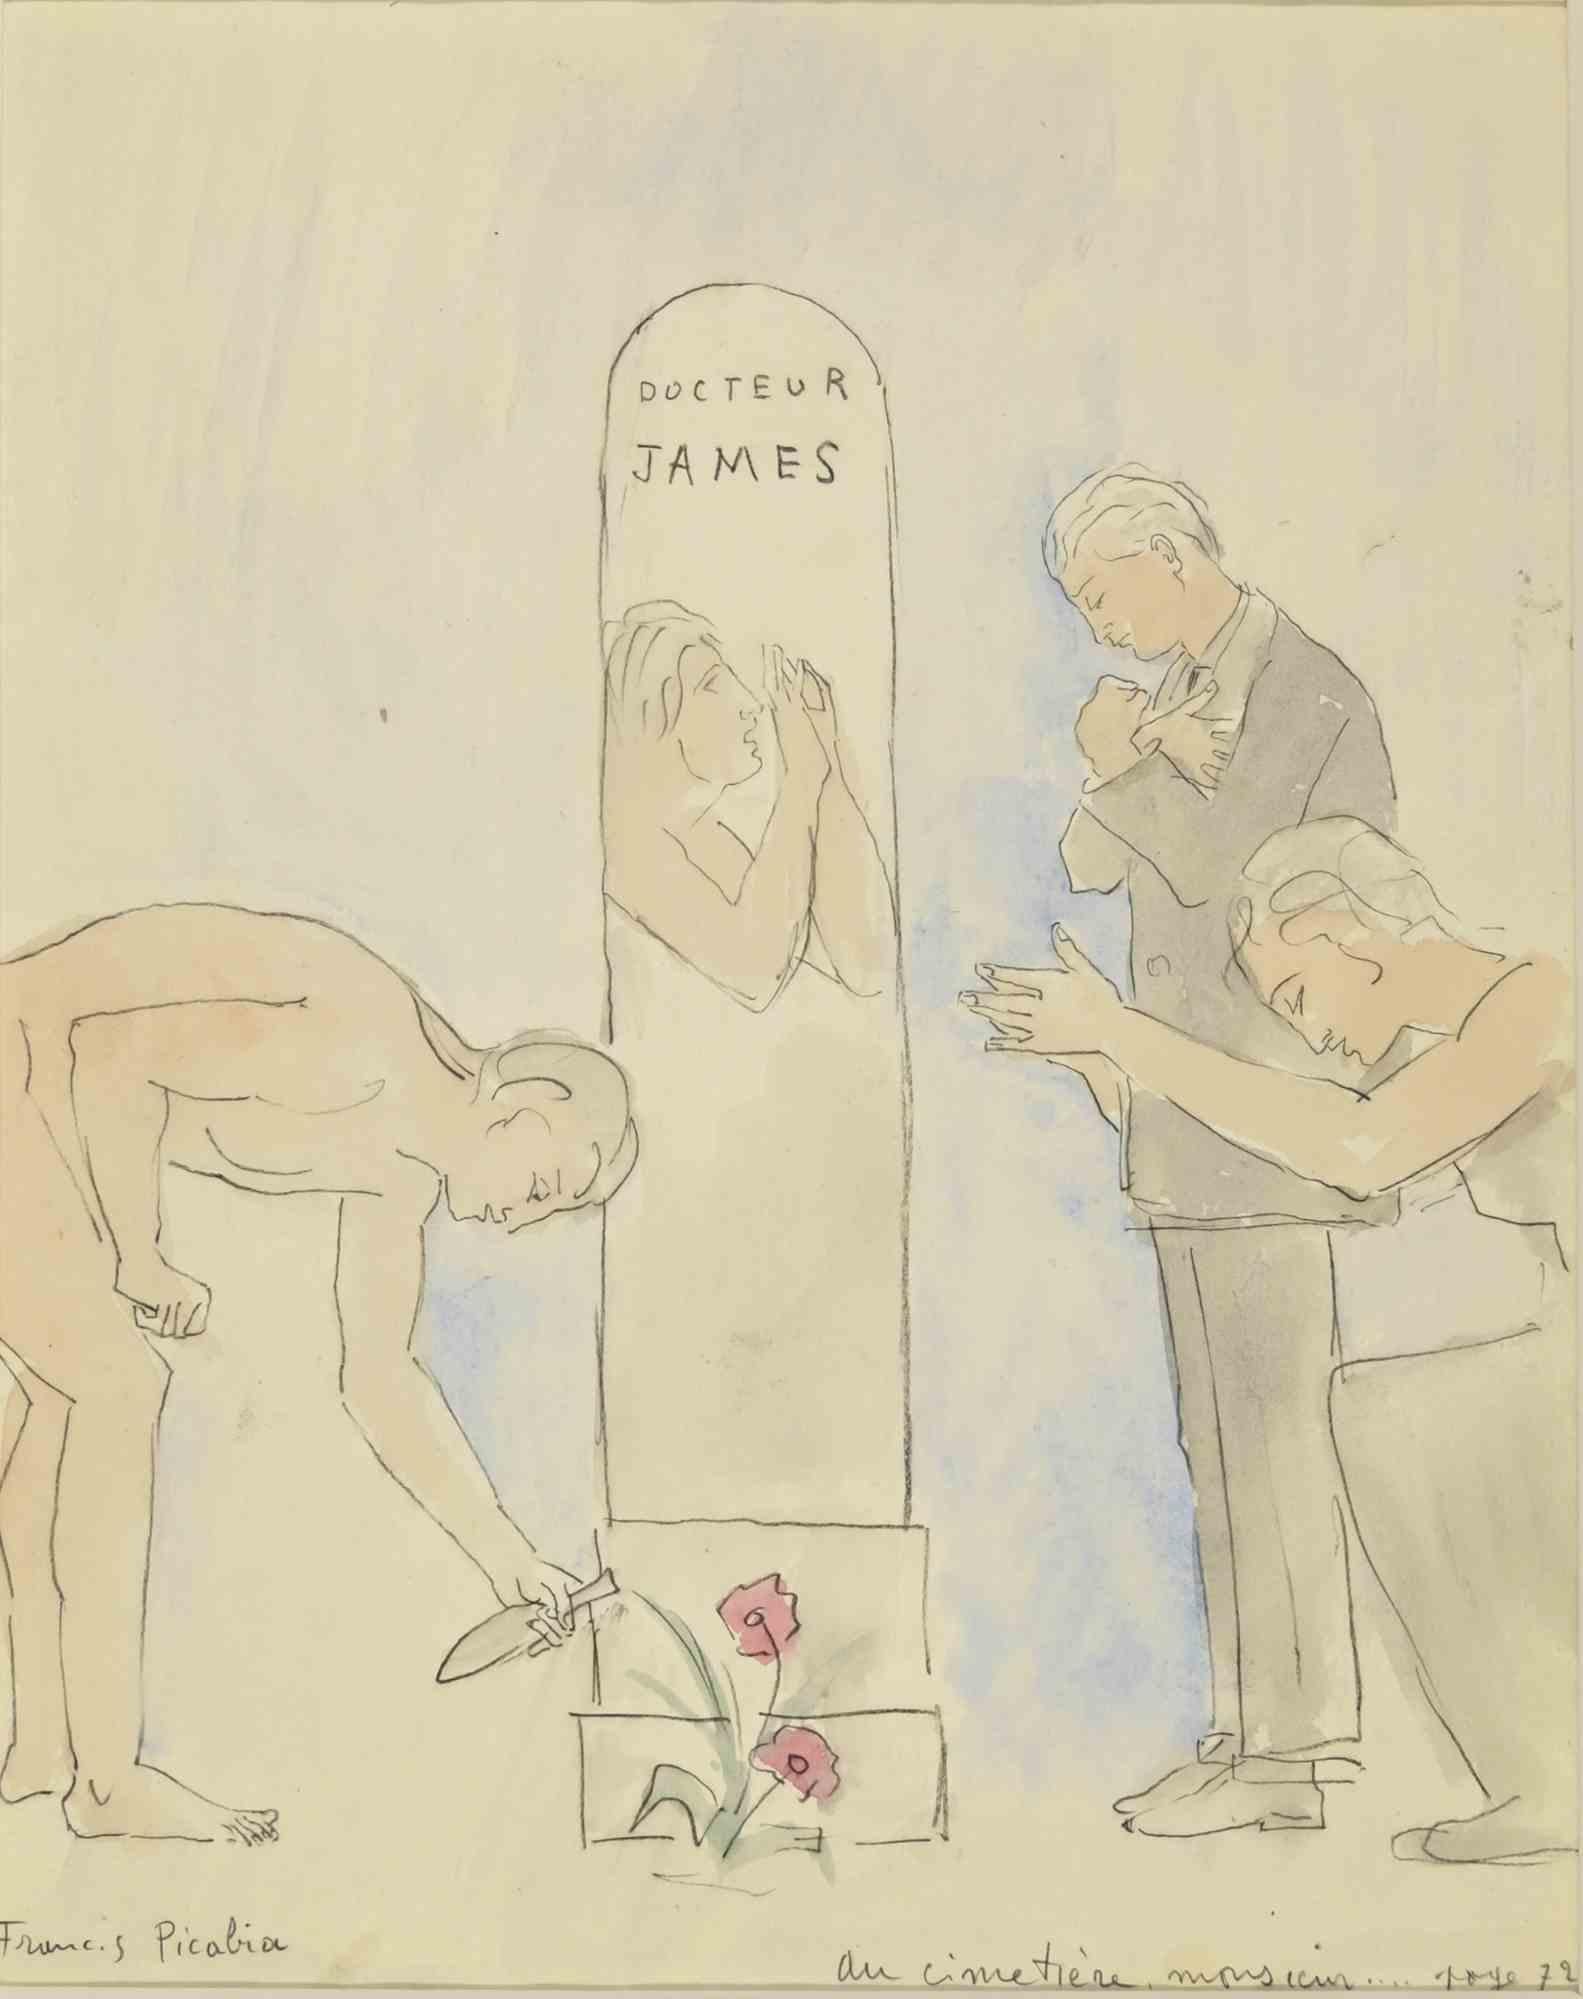 Au Cimetière Monsieur - Bleistift und Aquarell auf Papier von F. Picabia - 1931